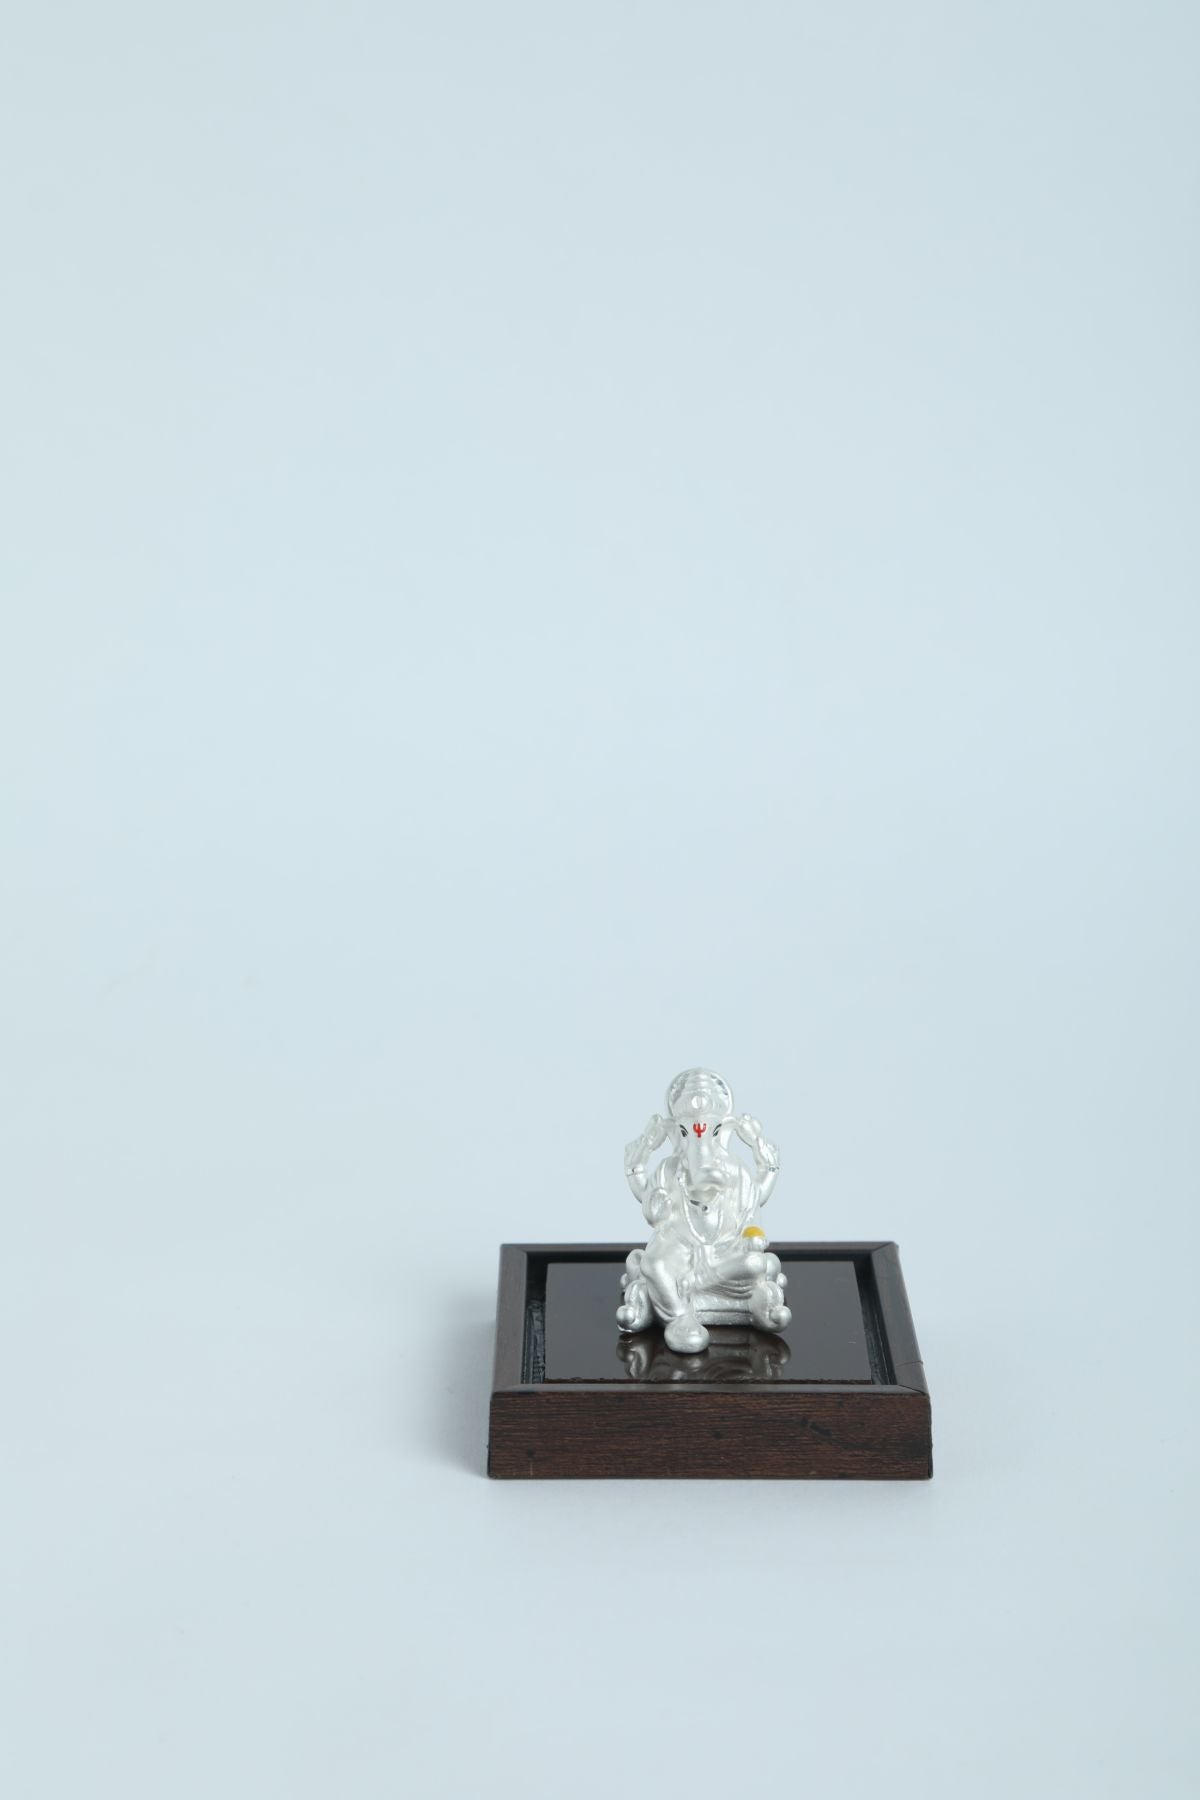 999 Pure Silver Ganesha Idol By Krysaliis Isvara - Krign_Ms03 Idols